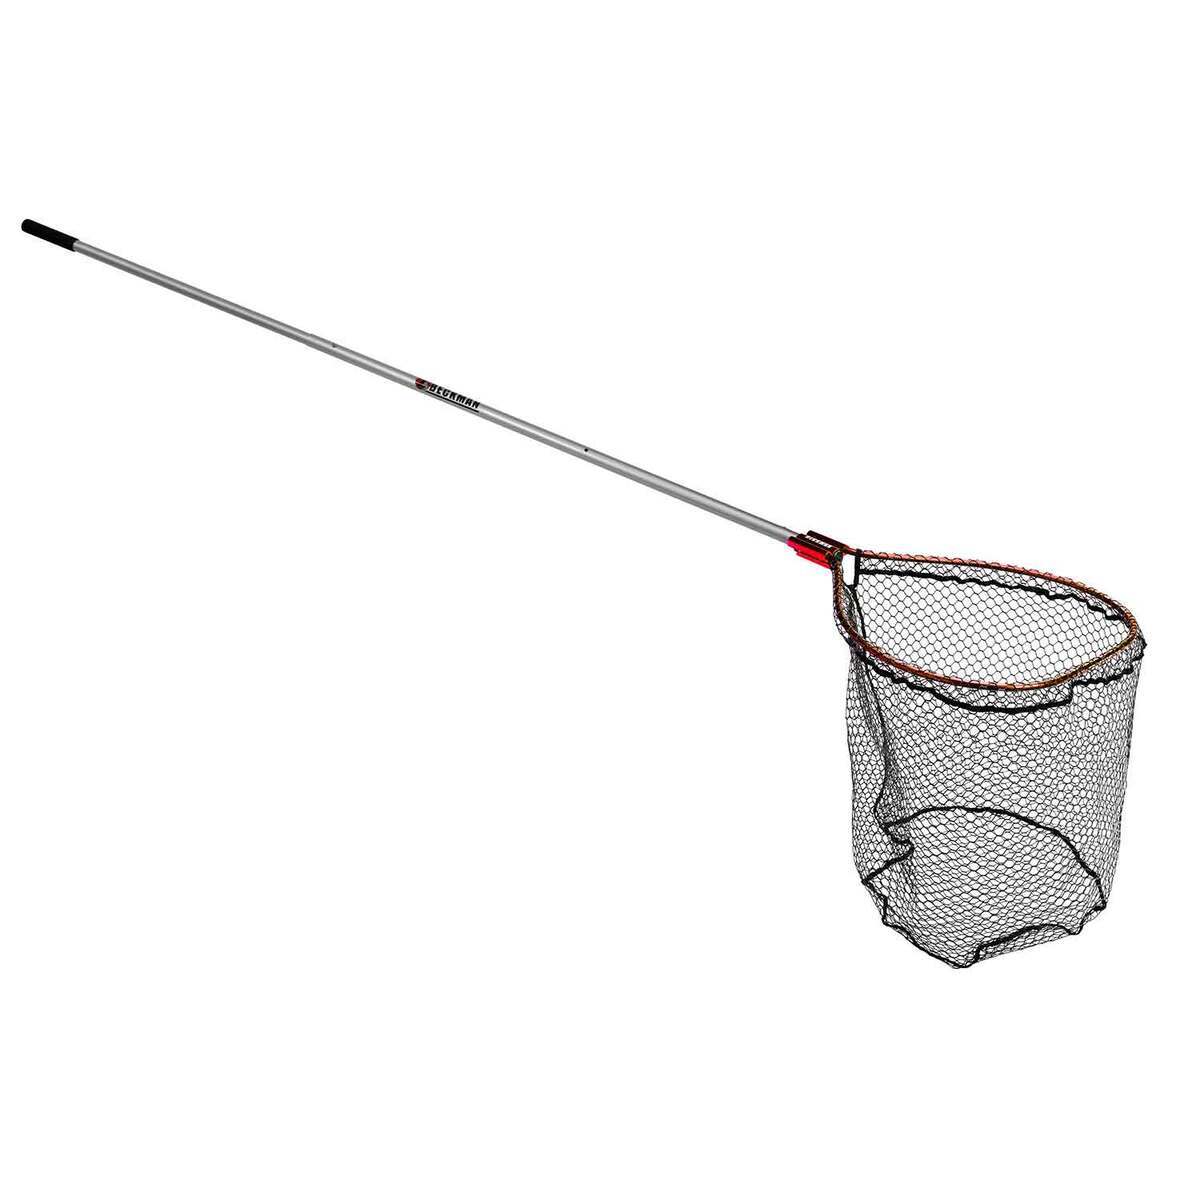 Trout Fishing Net - Soft Rubber Mesh - Aluminum Net - Black or Red - USA  SELLER